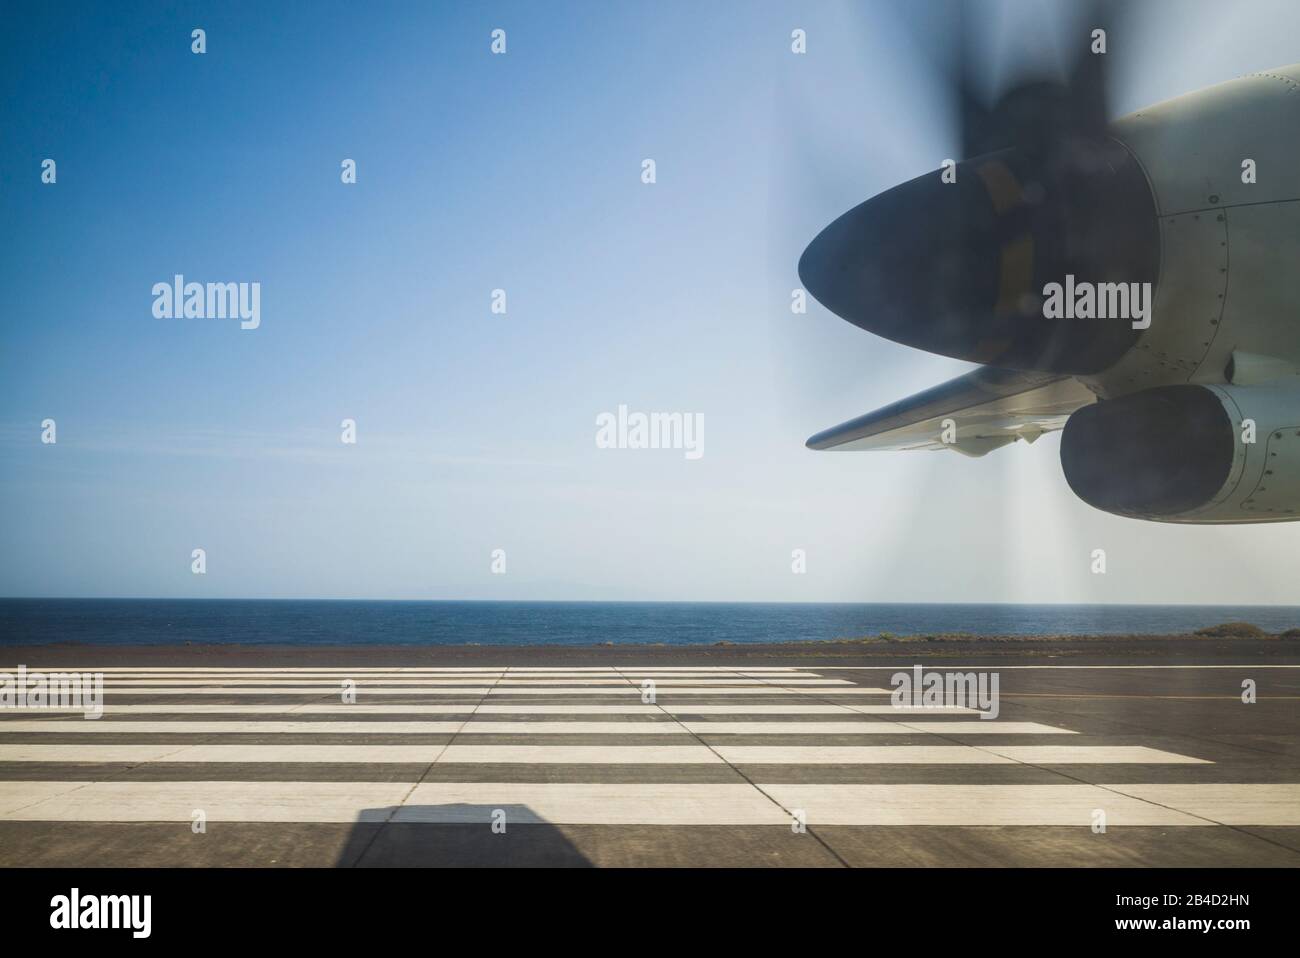 Spain, Canary Islands, El Hierro Island, propellor-driven aircraft at El Hierro Airport Stock Photo